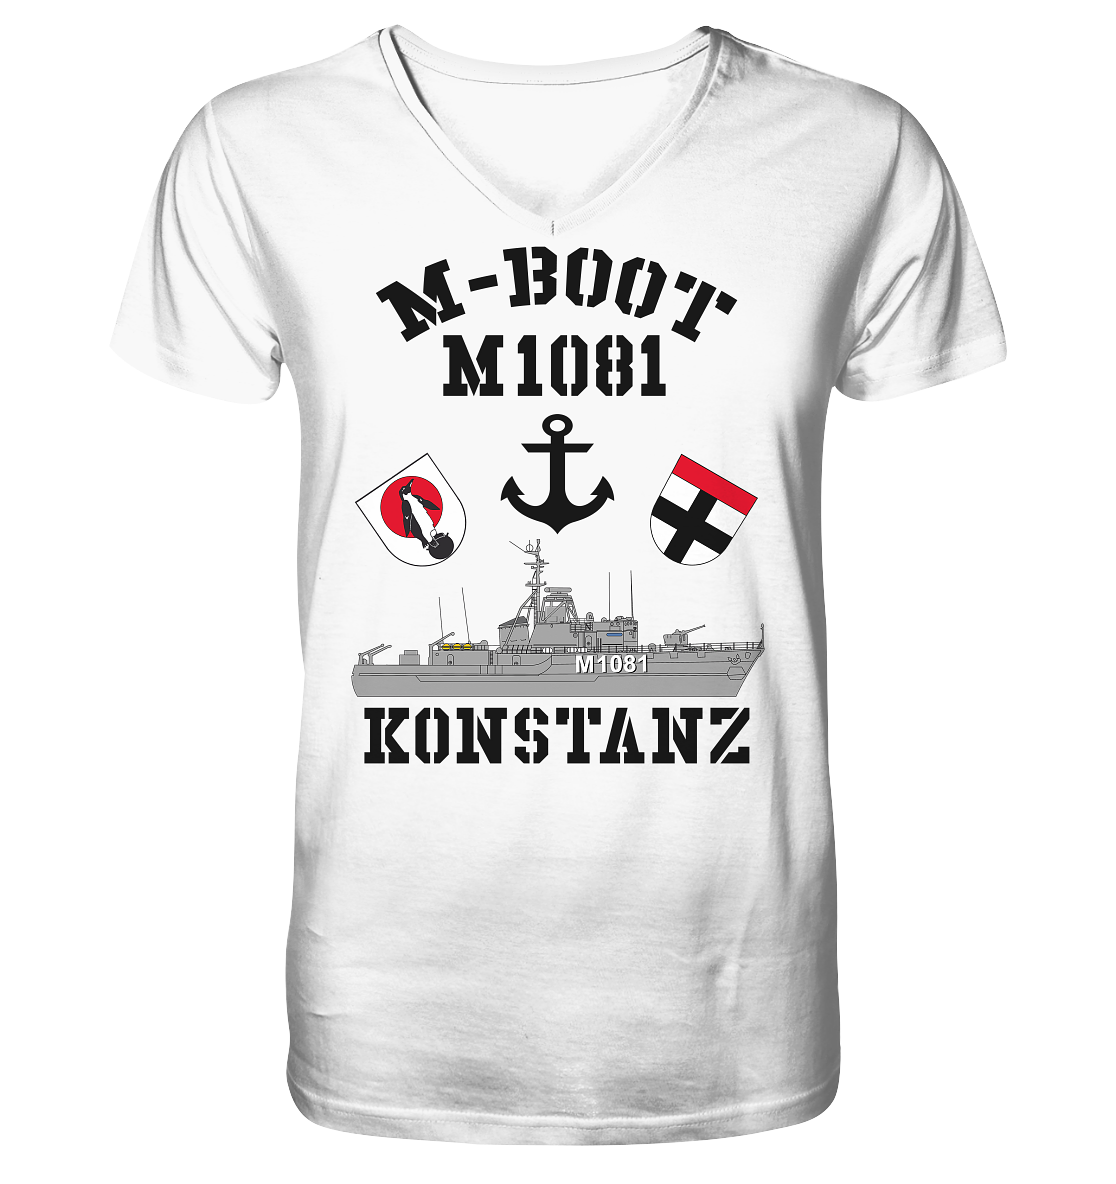 M-Boot M1081 KONSTANZ Anker (HL) - Mens Organic V-Neck Shirt